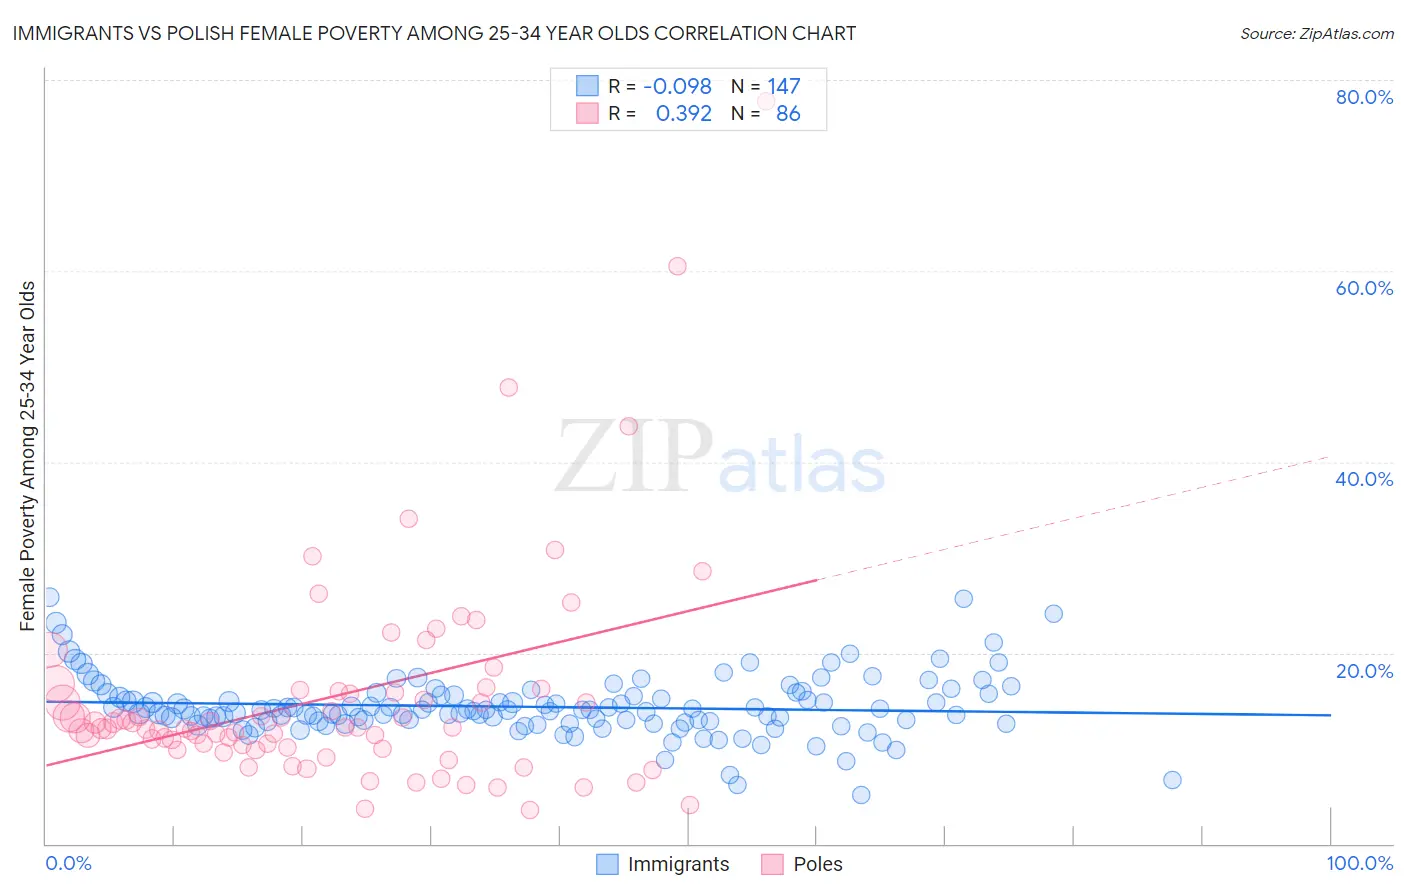 Immigrants vs Polish Female Poverty Among 25-34 Year Olds